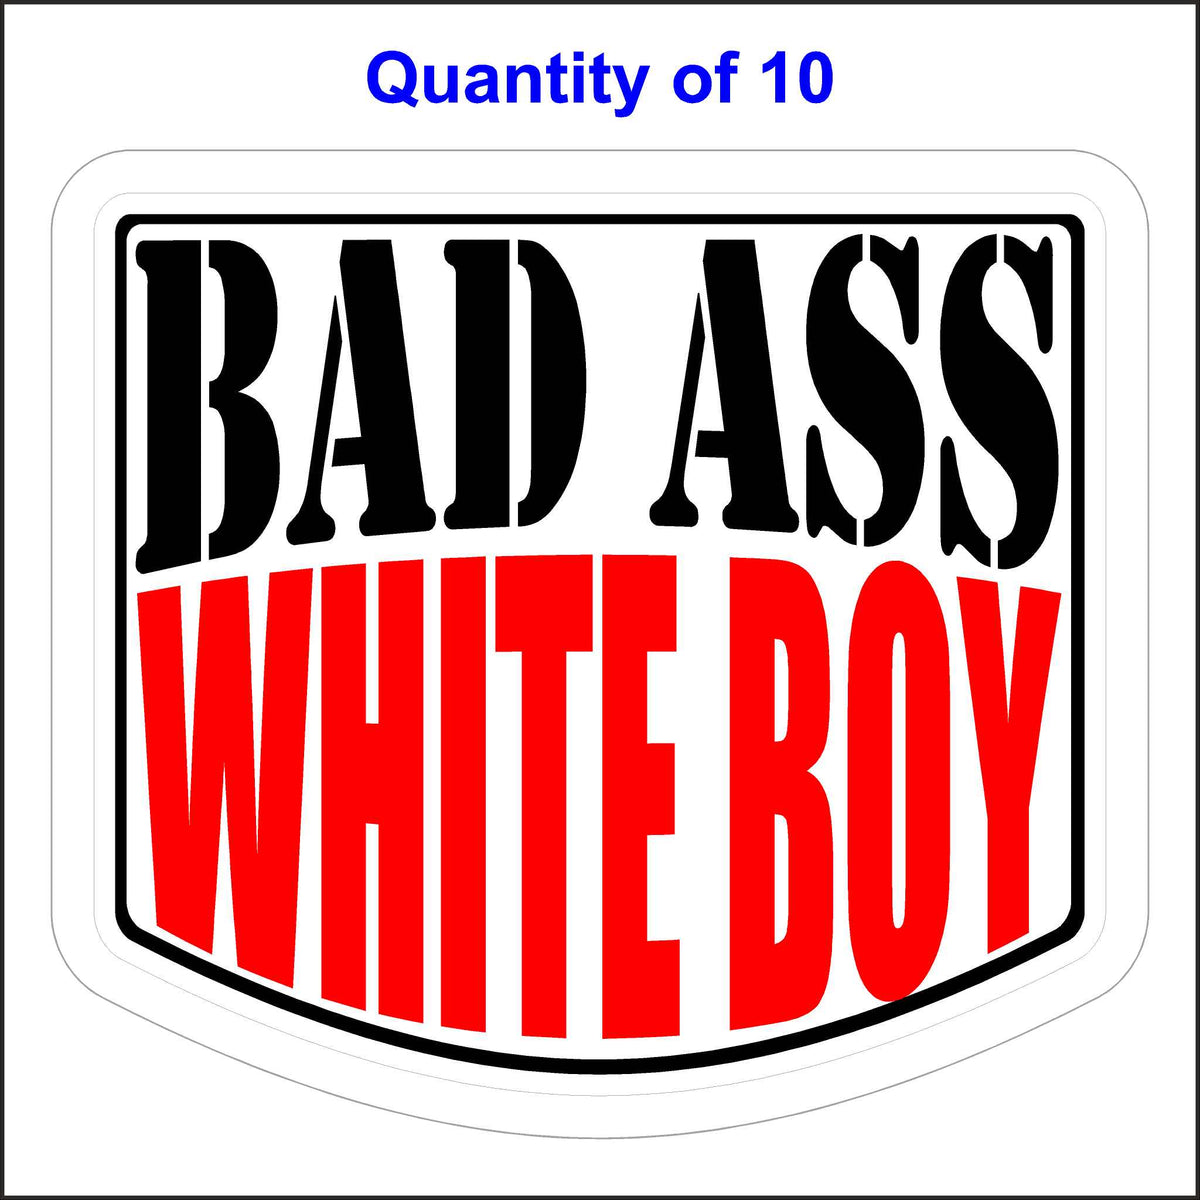 Bad Ass White Boy Sticker 10 Quantity.